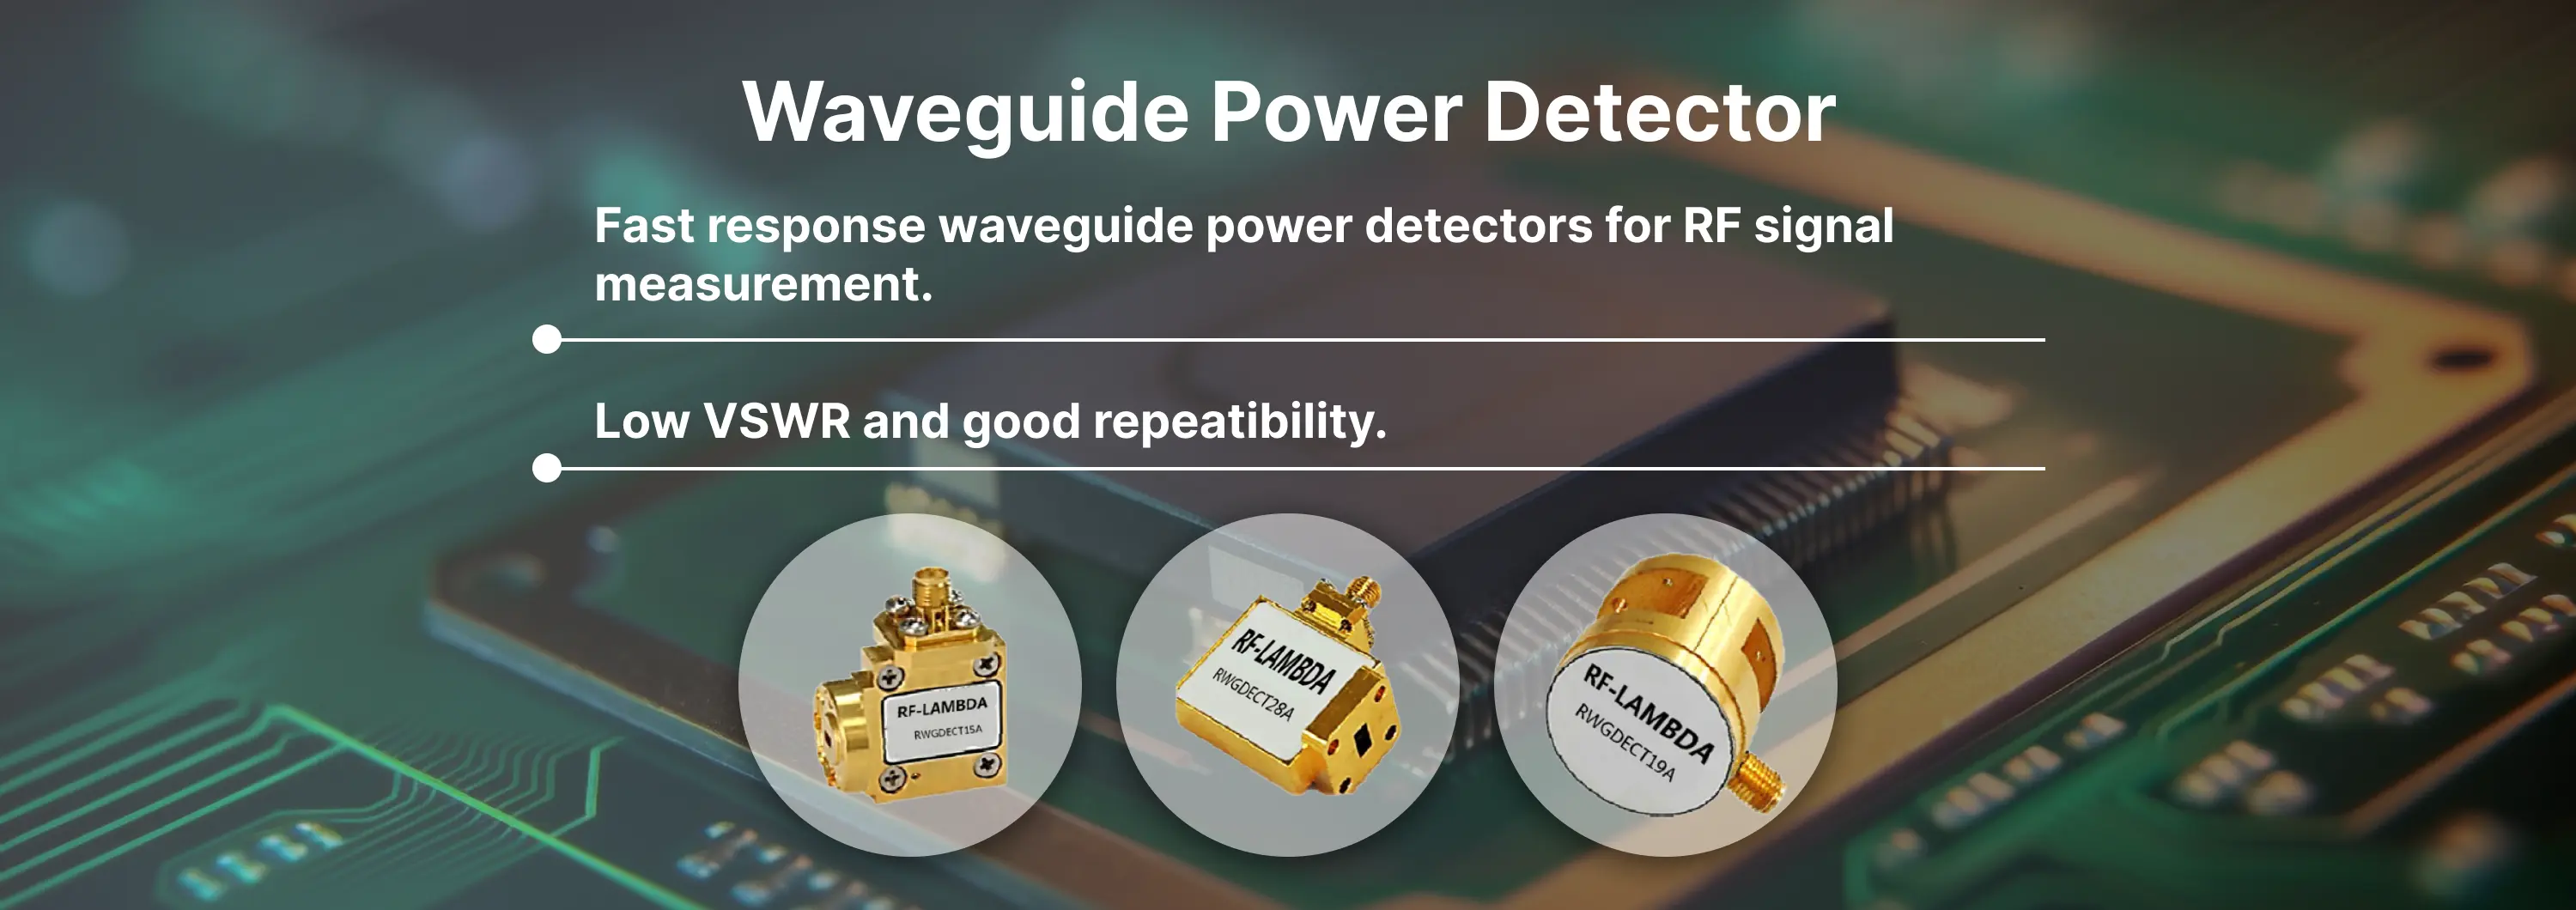 Waveguide Power Detector Banner